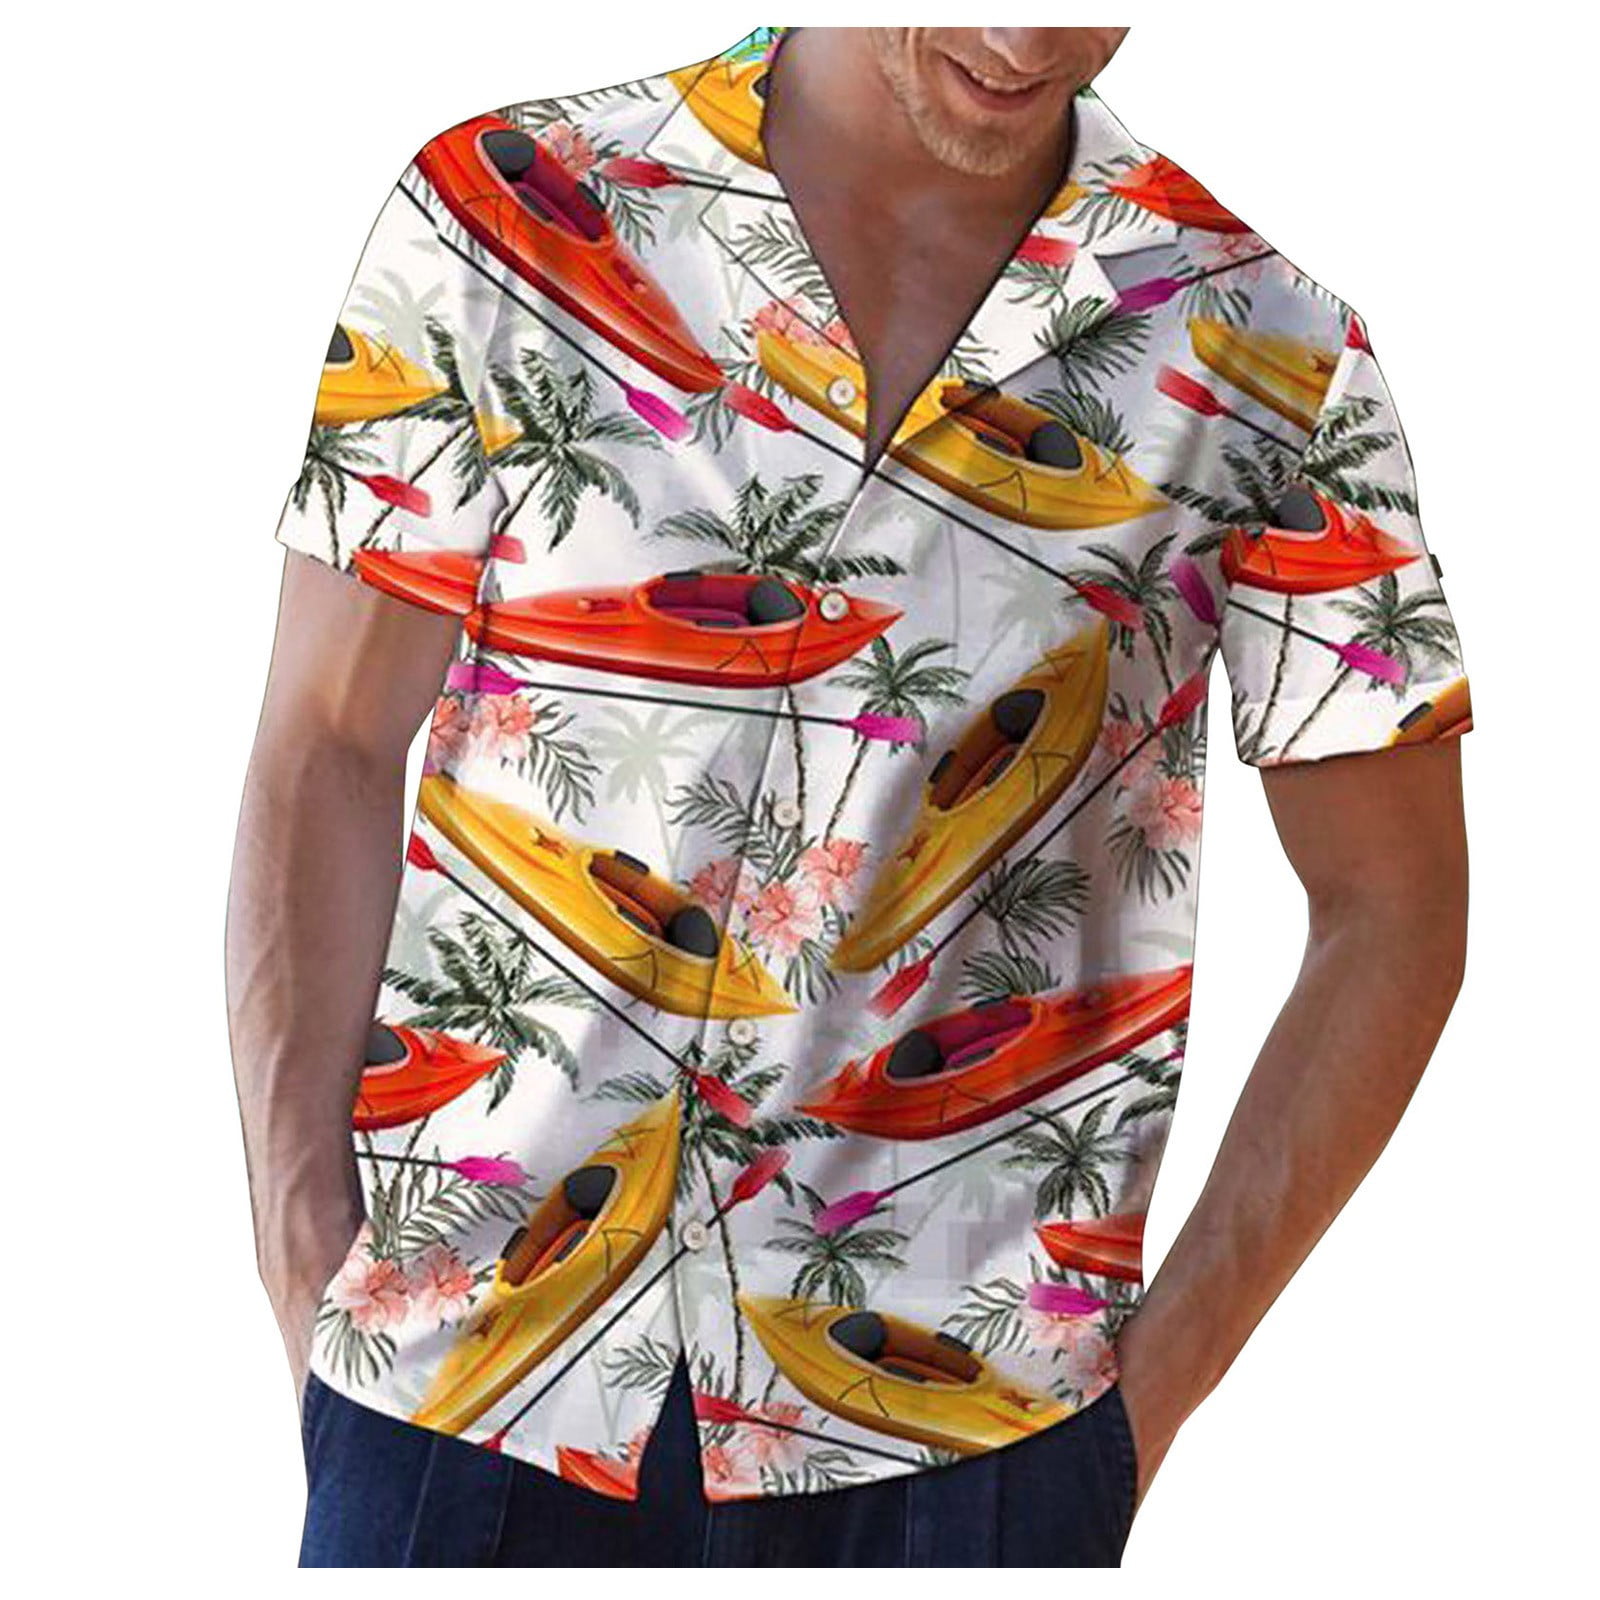 B91xZ Big And Tall Shirts for Men Men's Spring Summer Tops Hawaii ...